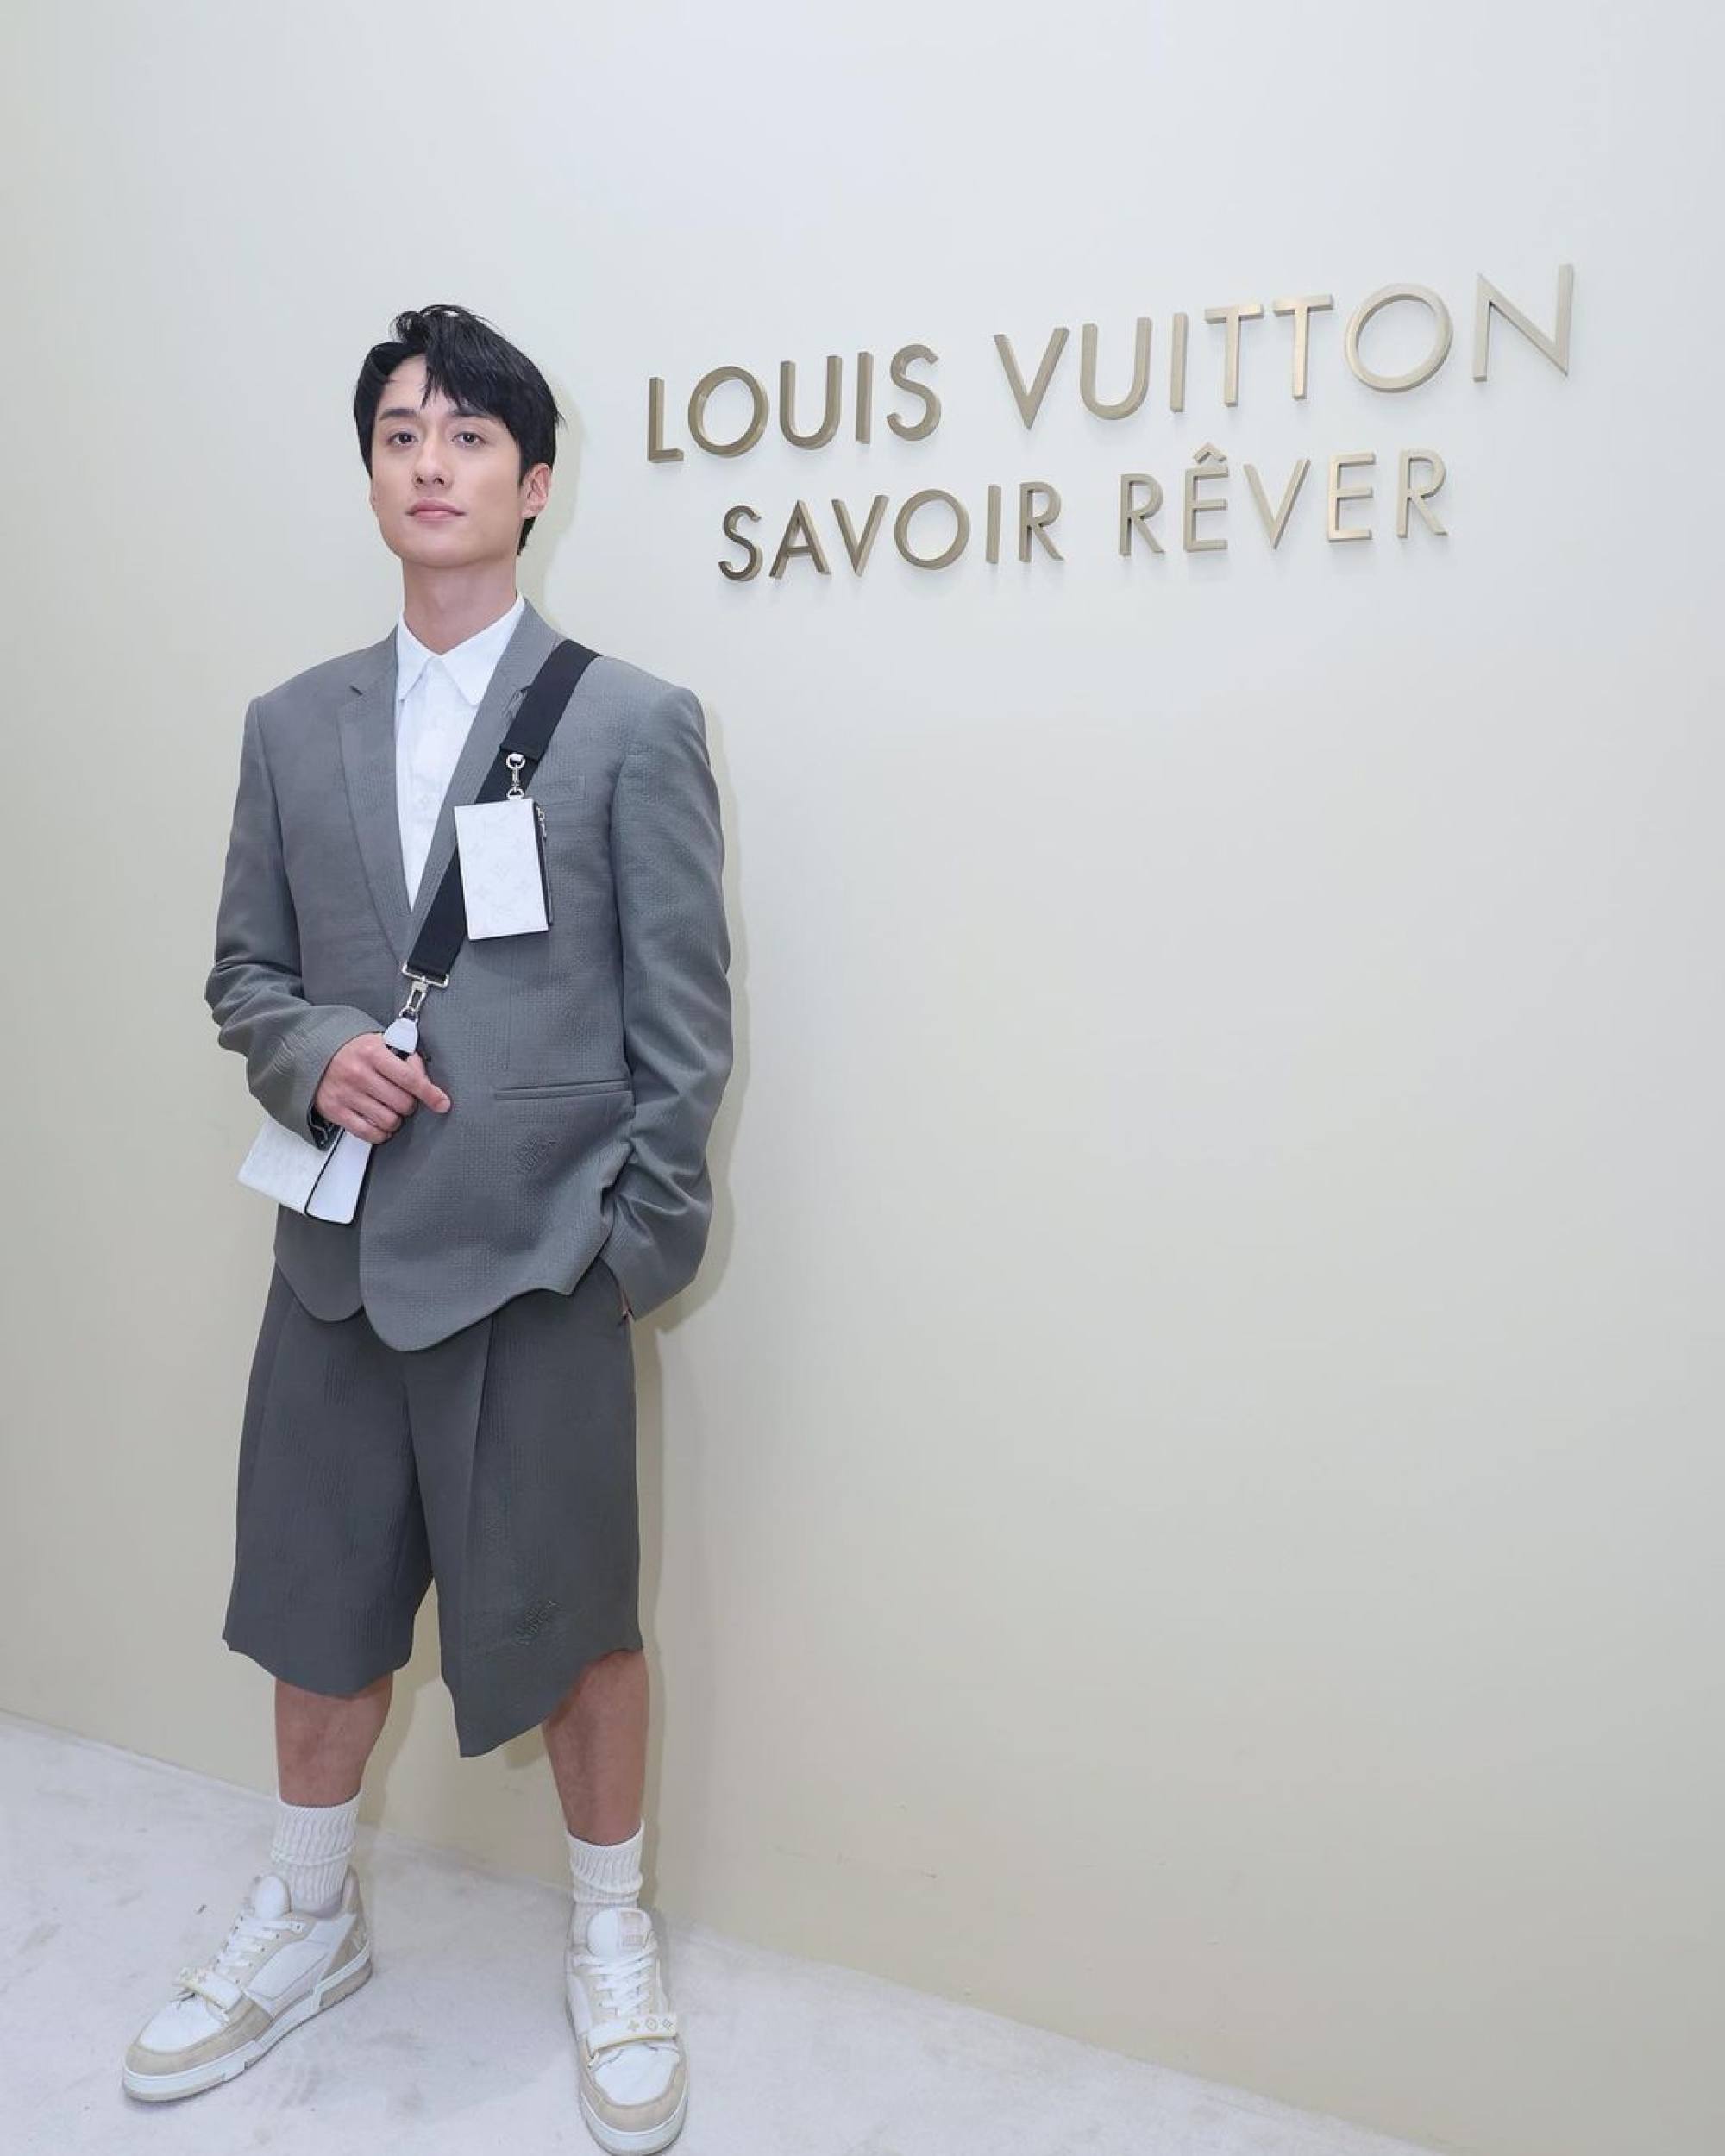 Louis Vuitton global brand ambassador - Star Dramachaser